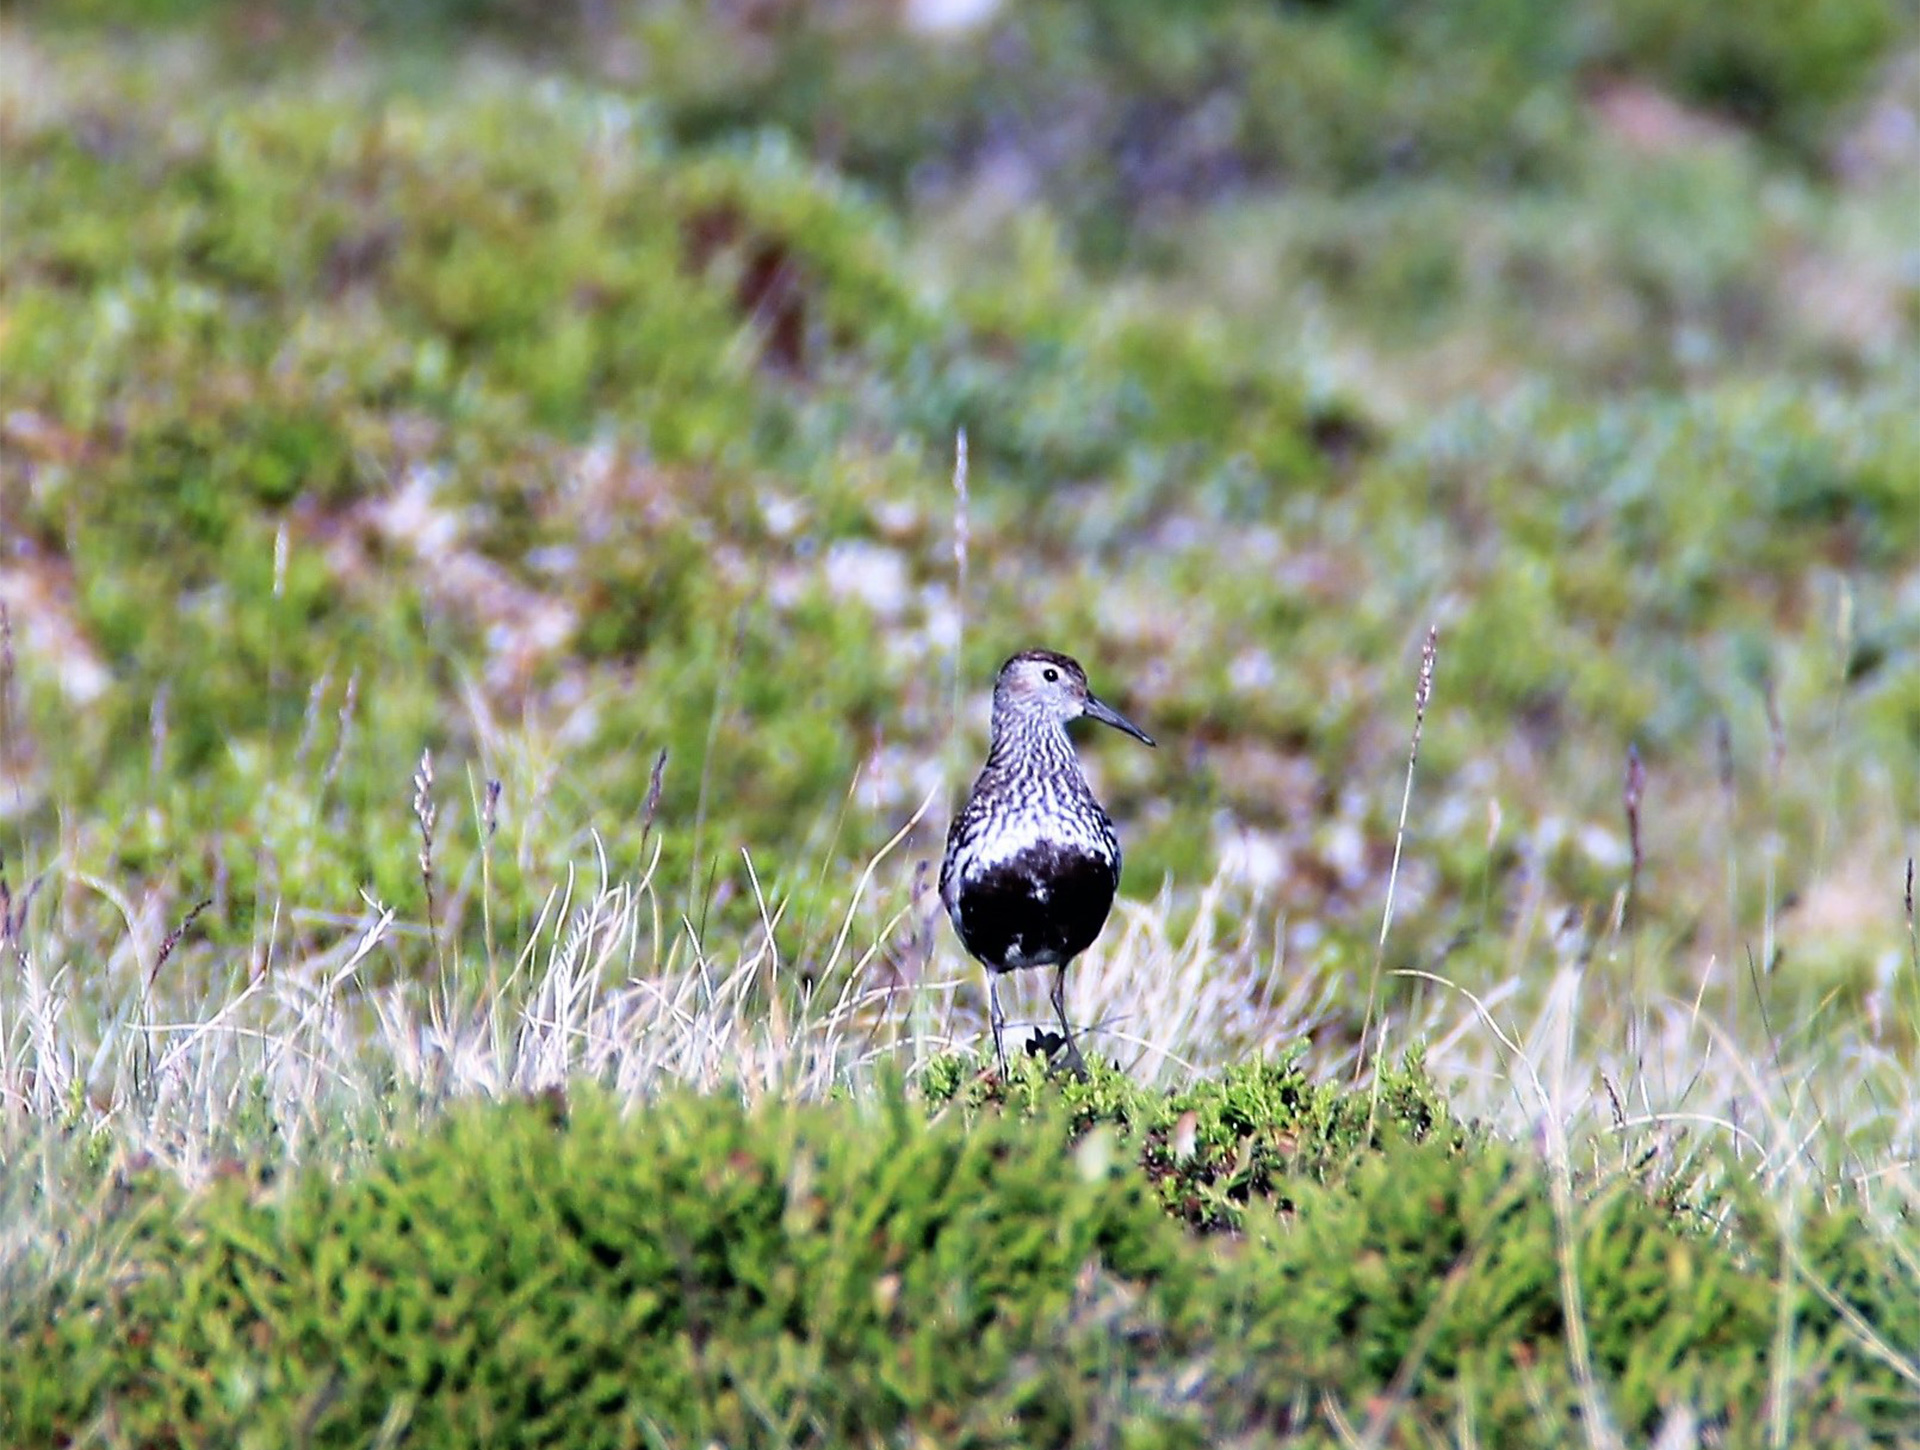 Norwegian Lemming (Lemmus lemmus), Setesdal Vesthei - Ryfylkeheiane  Landscape Conservation Area